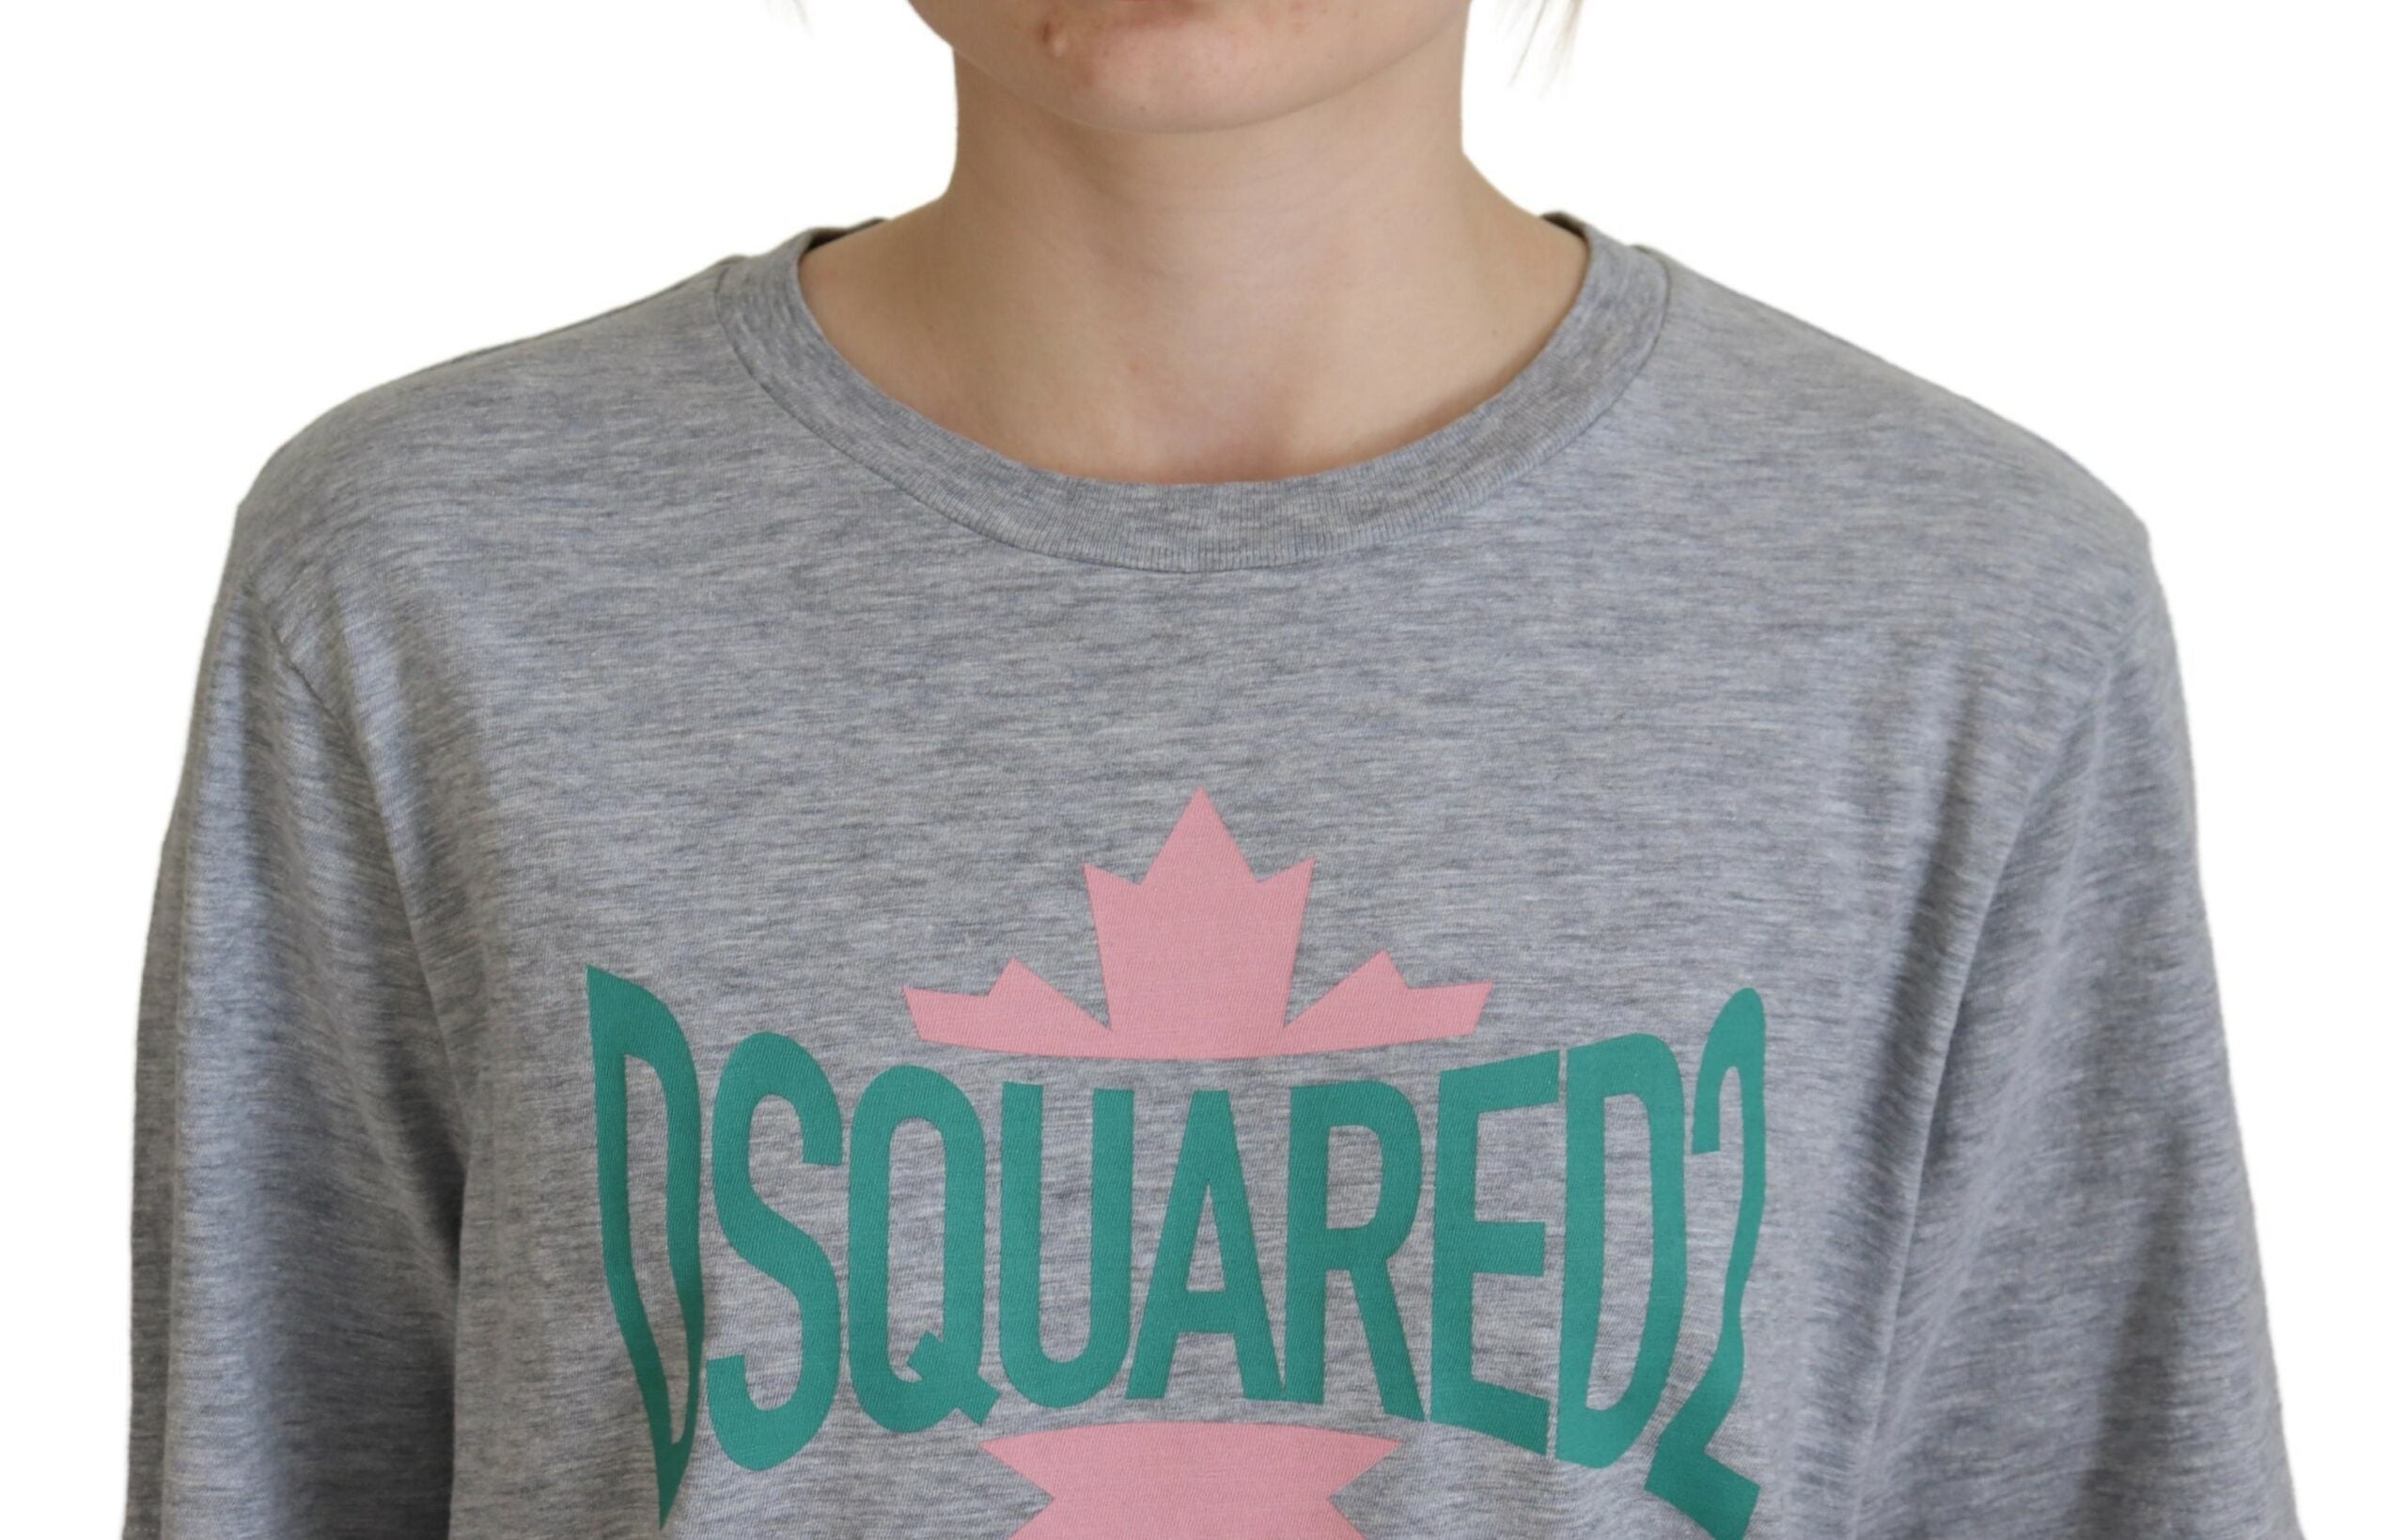 Dsquared² Gray Logo Cotton Crewneck Short Sleeve Tee T-shirt